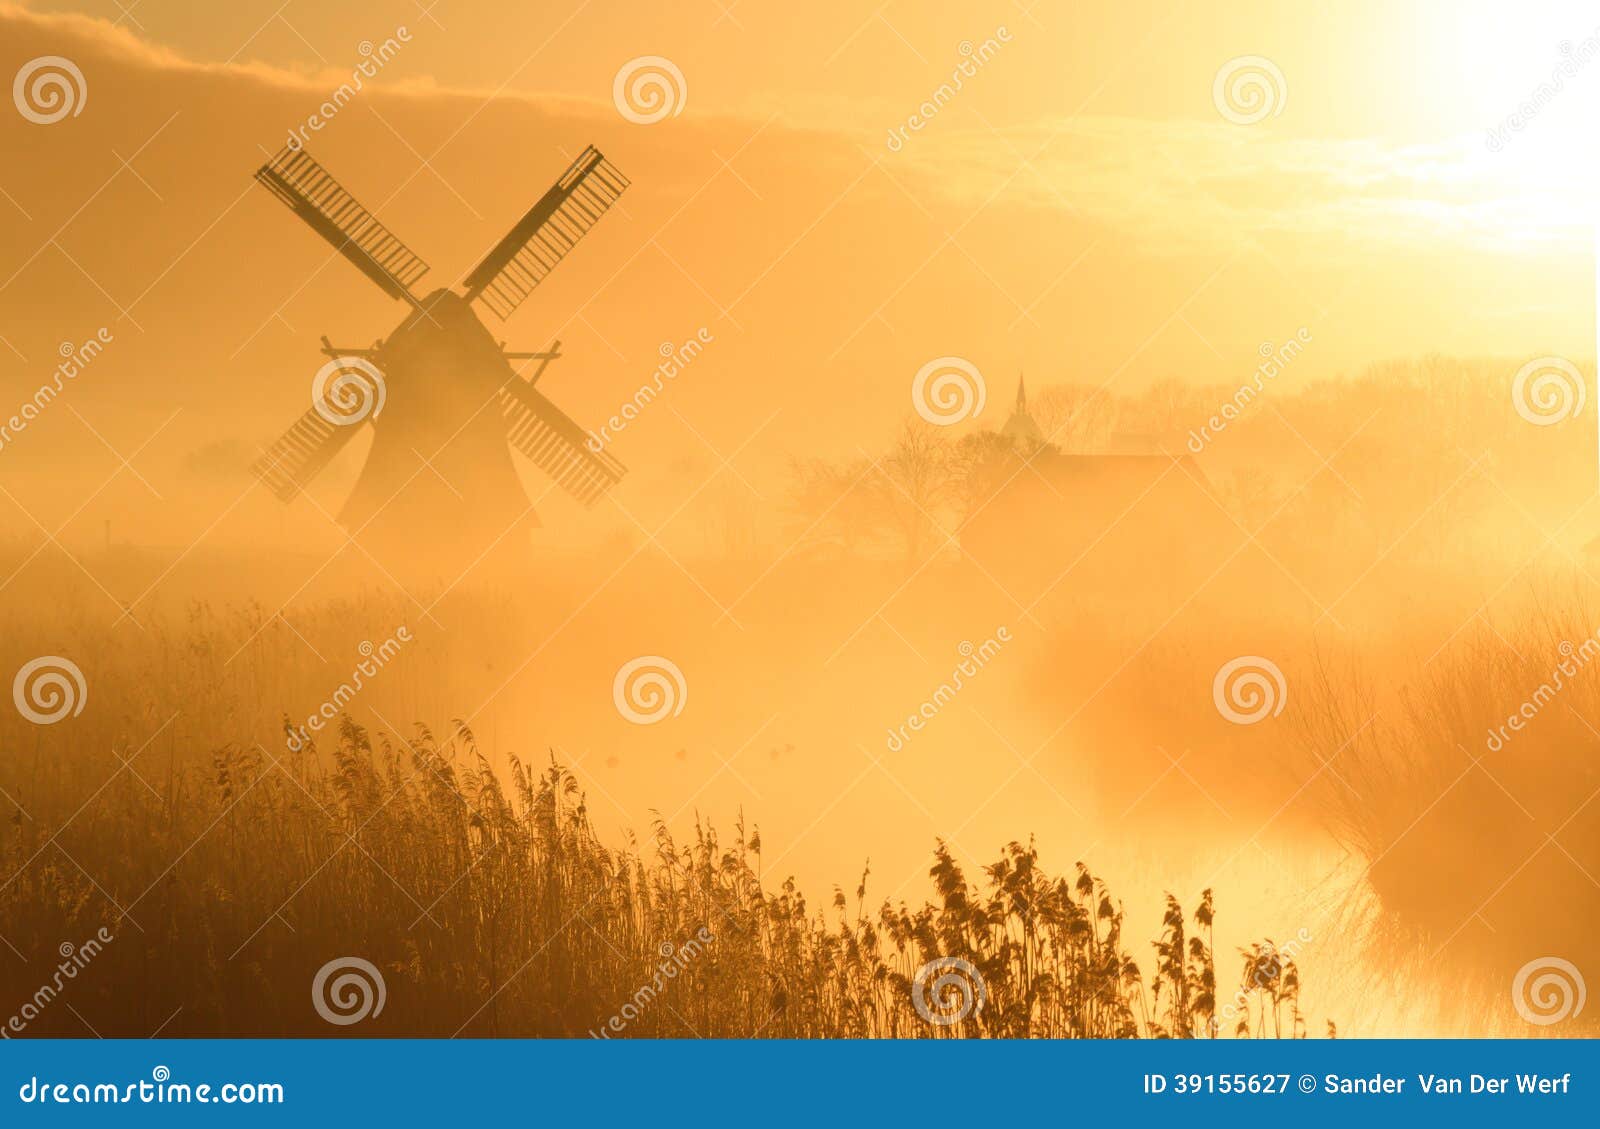 Dutch sunrise. Windmill during a foggy sunrise in the Dutch countryside.